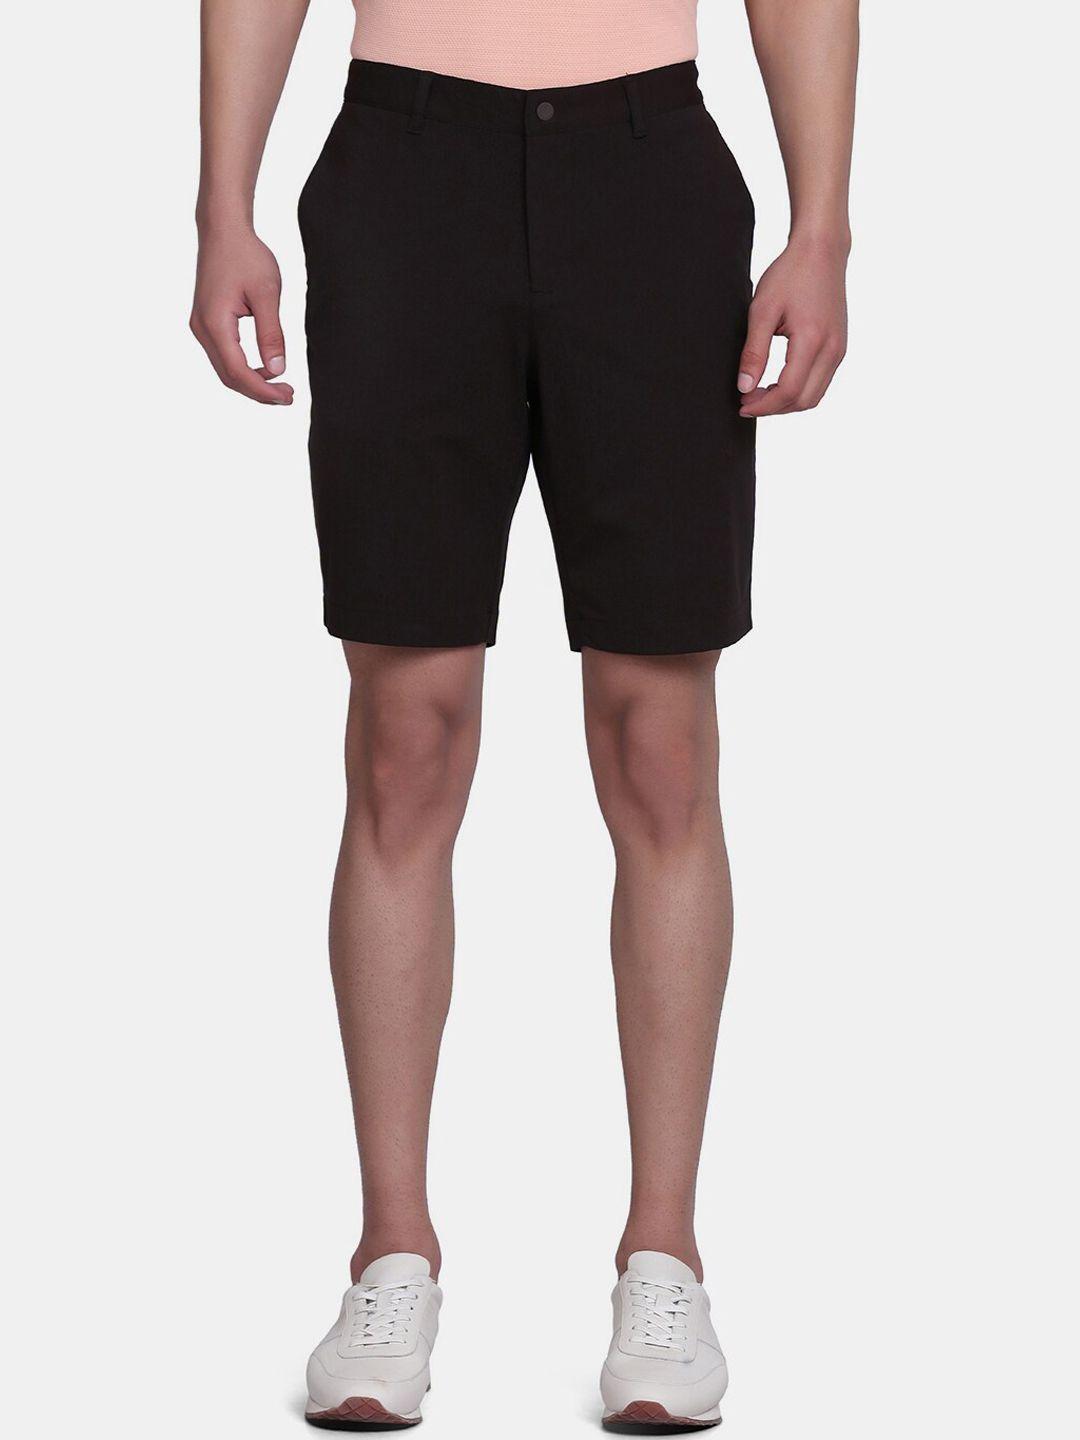 blackberrys men black bs-10 slim fit low-rise shorts